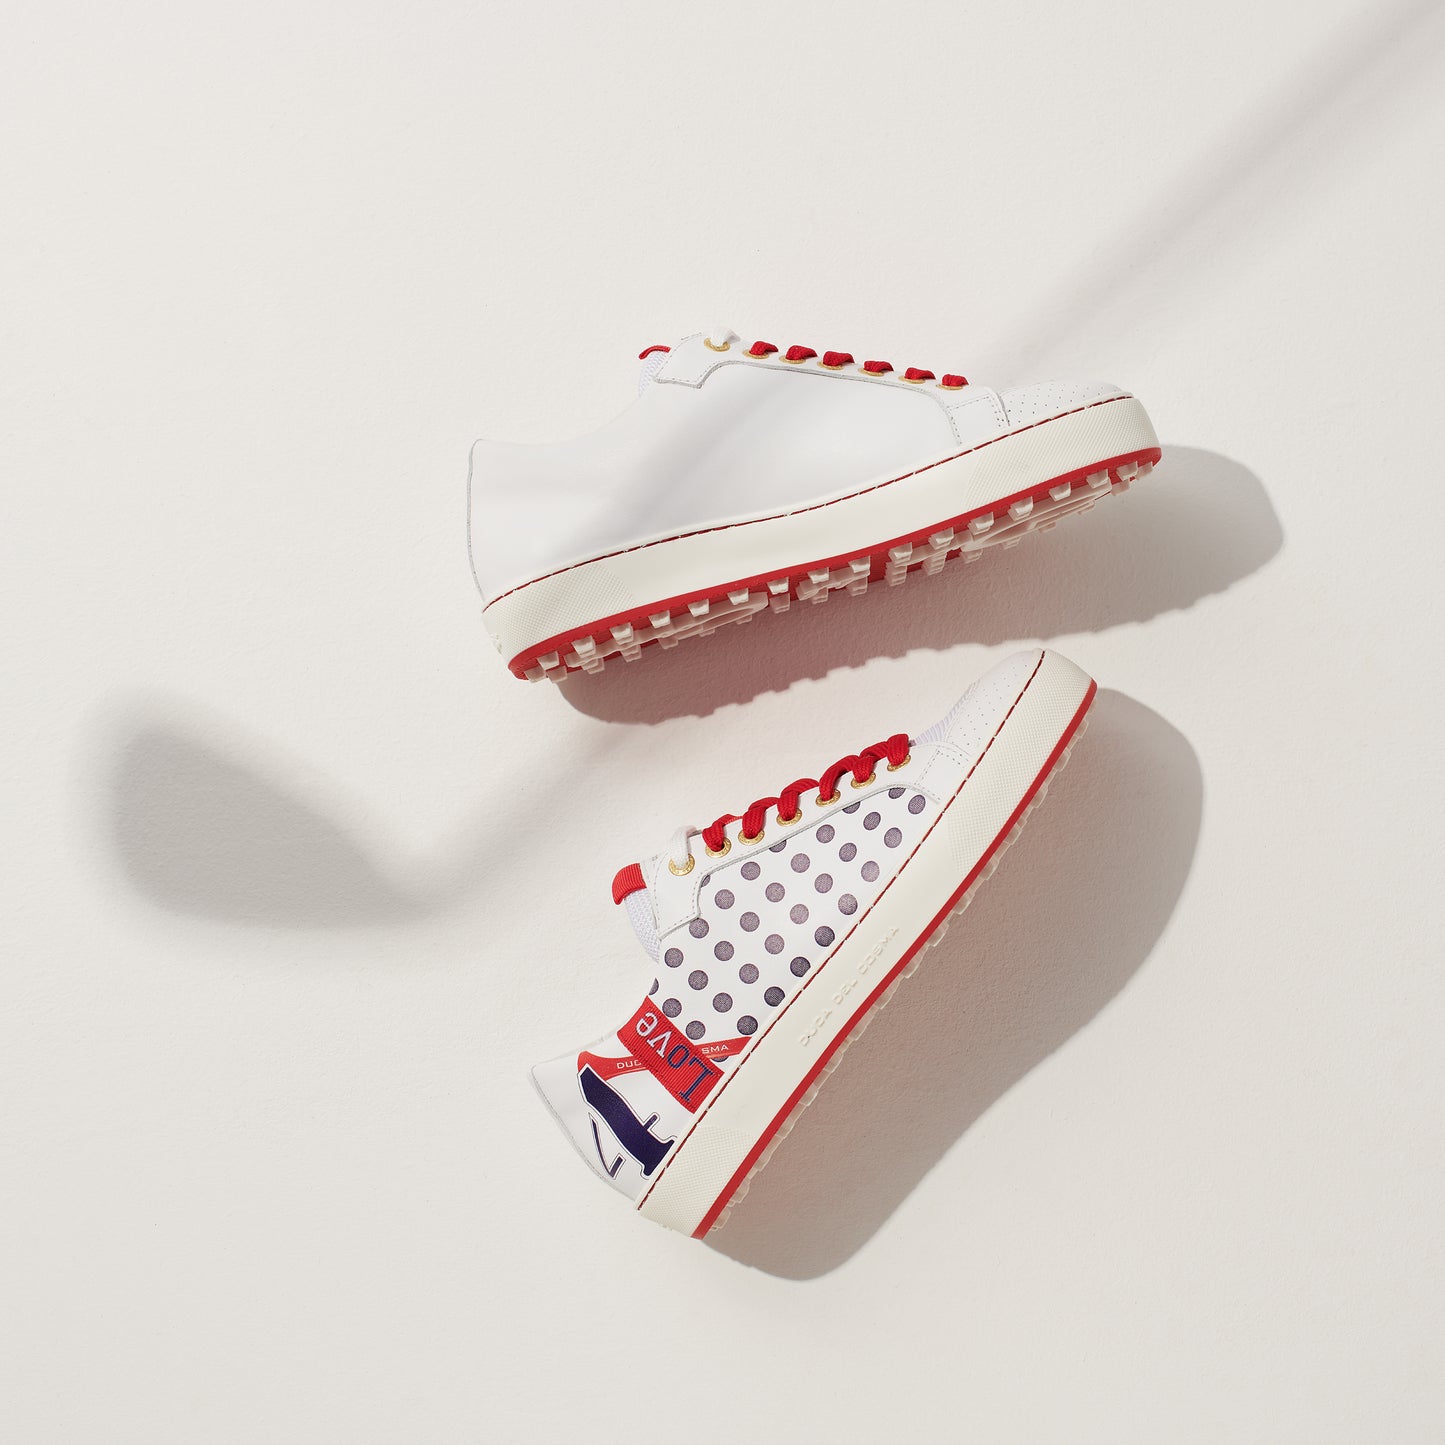 Women's Esti White / Red Golf Shoe